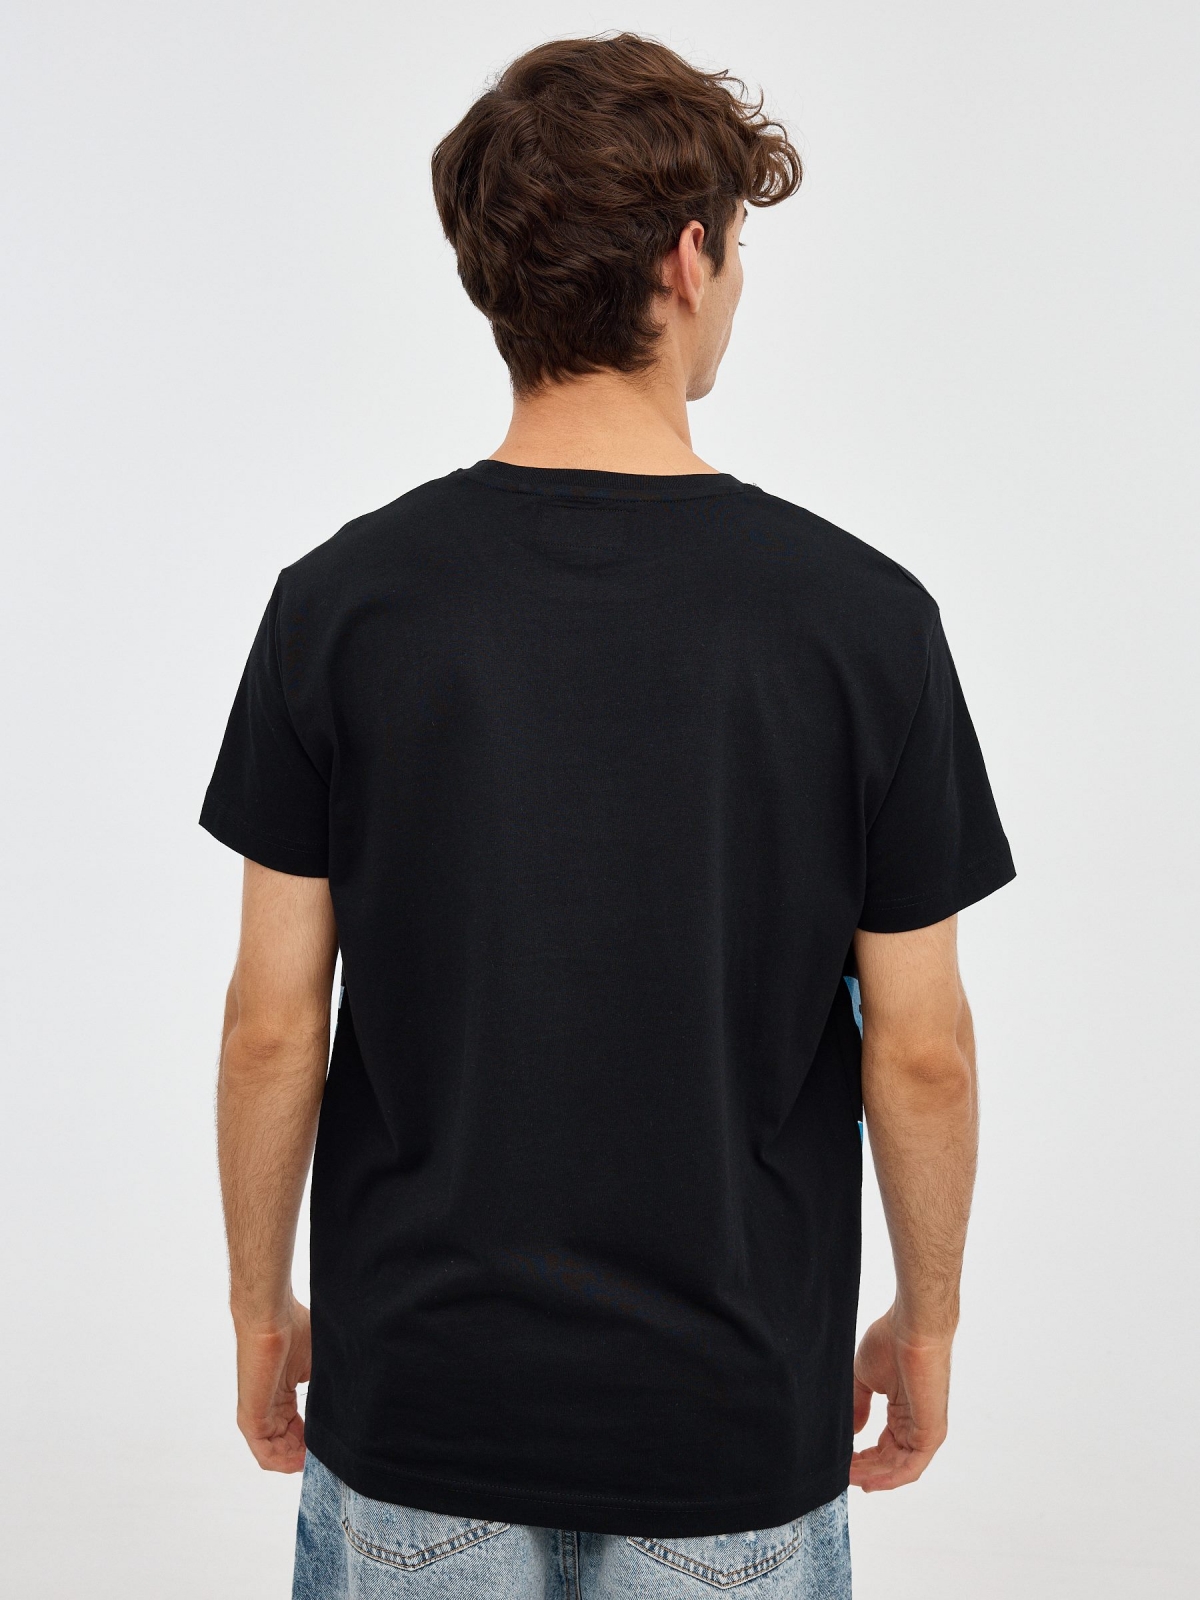 Camiseta print INSIDE negro vista media trasera